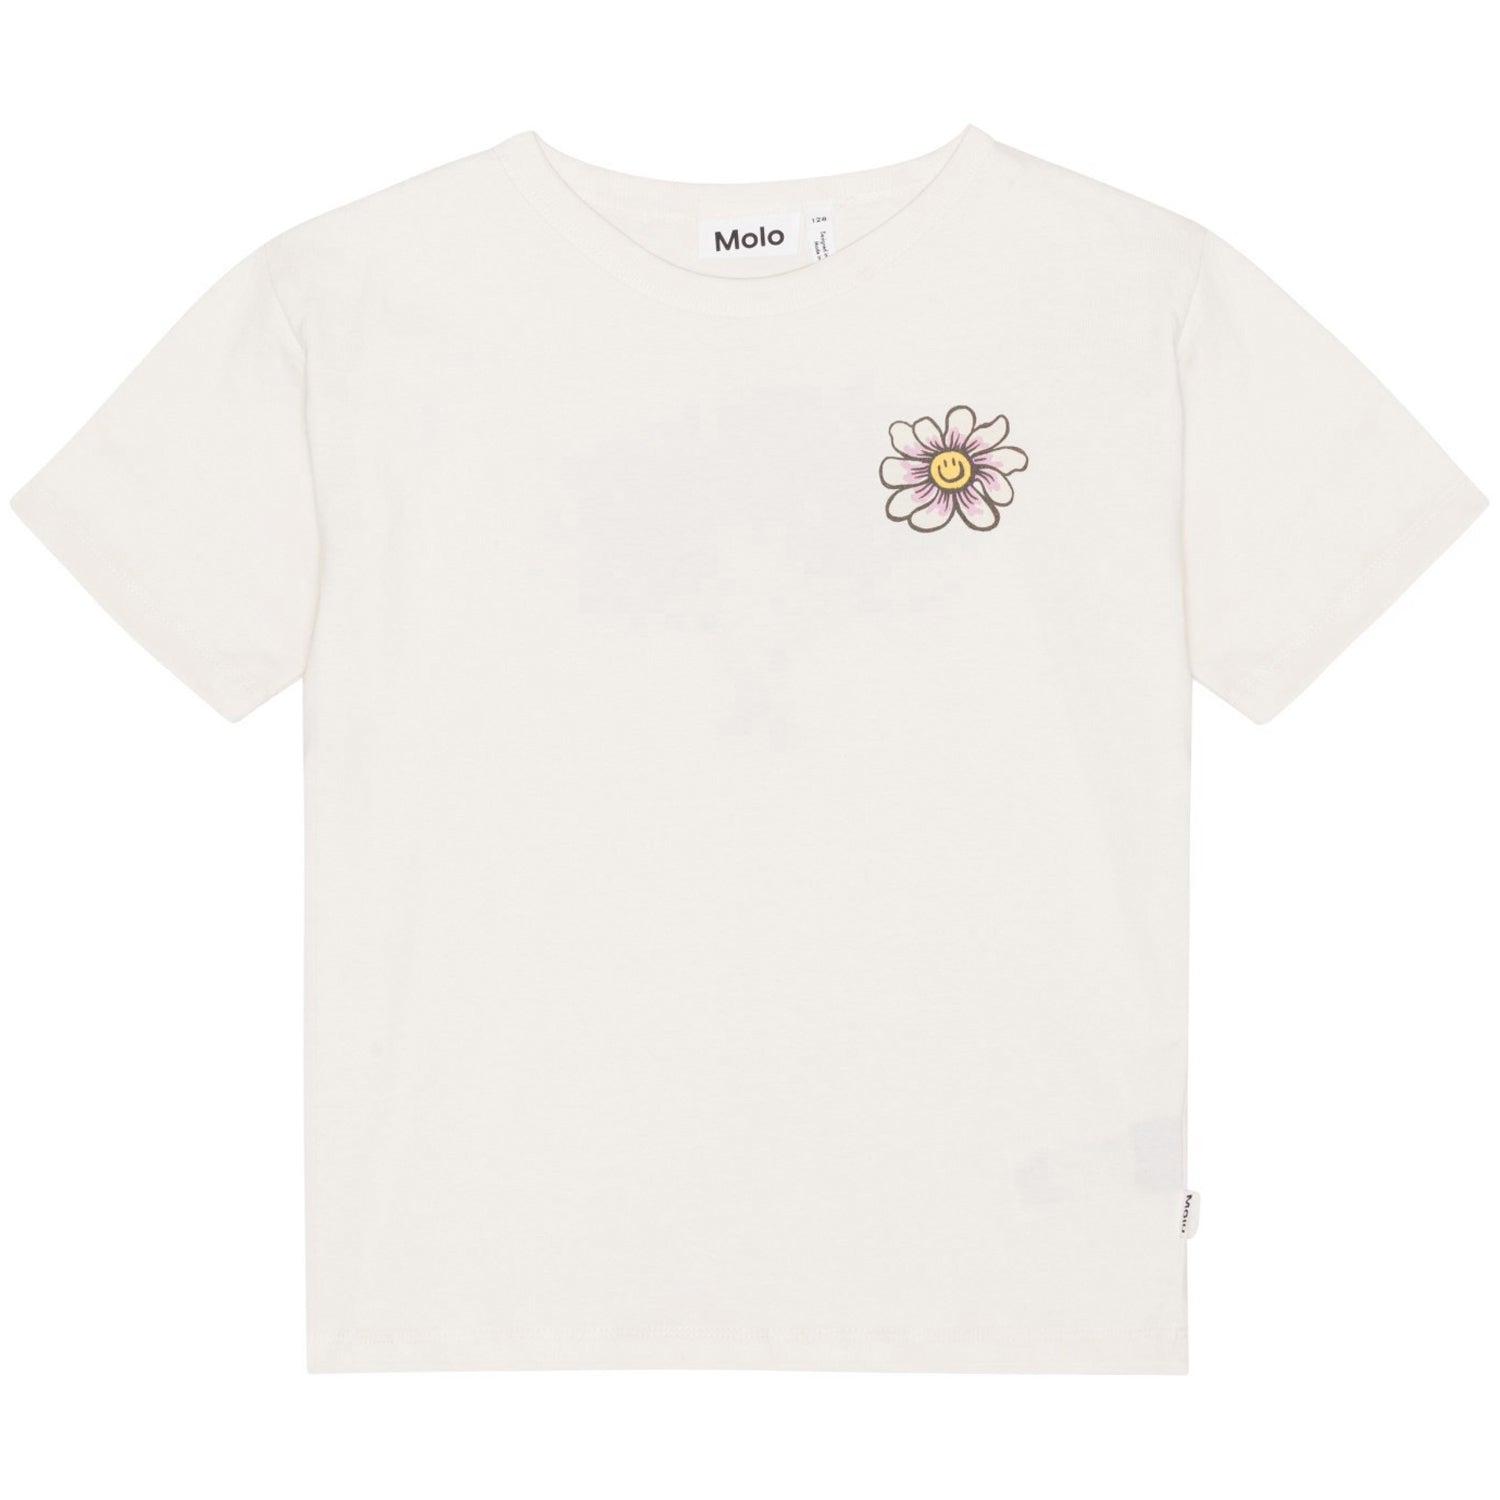 Riley T-Shirt - Floral Tennis